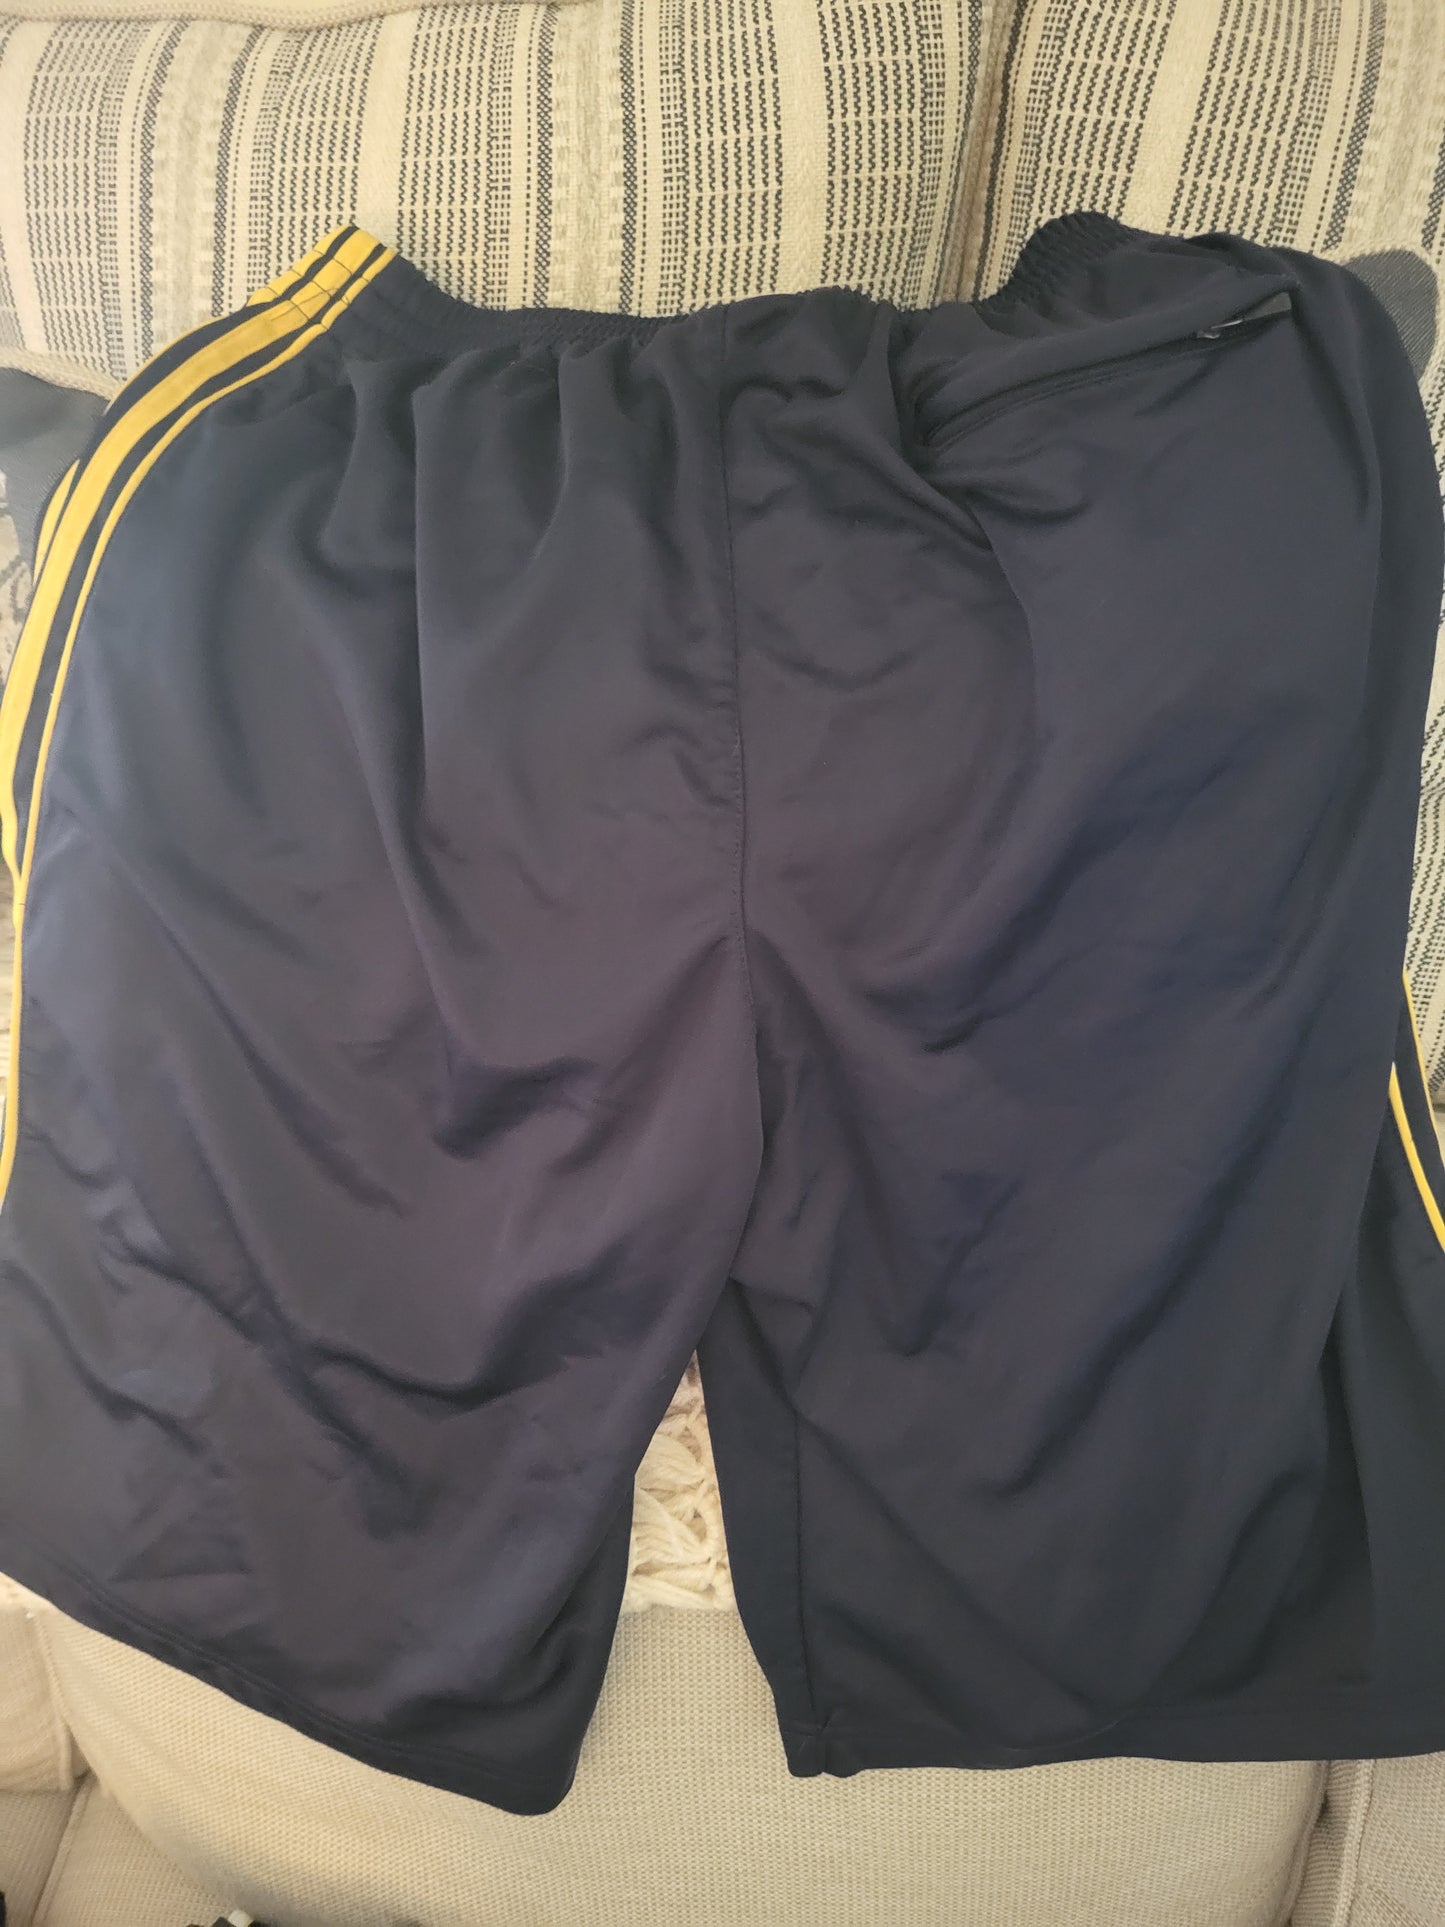 Michigan Wolverine Shorts - Nylon